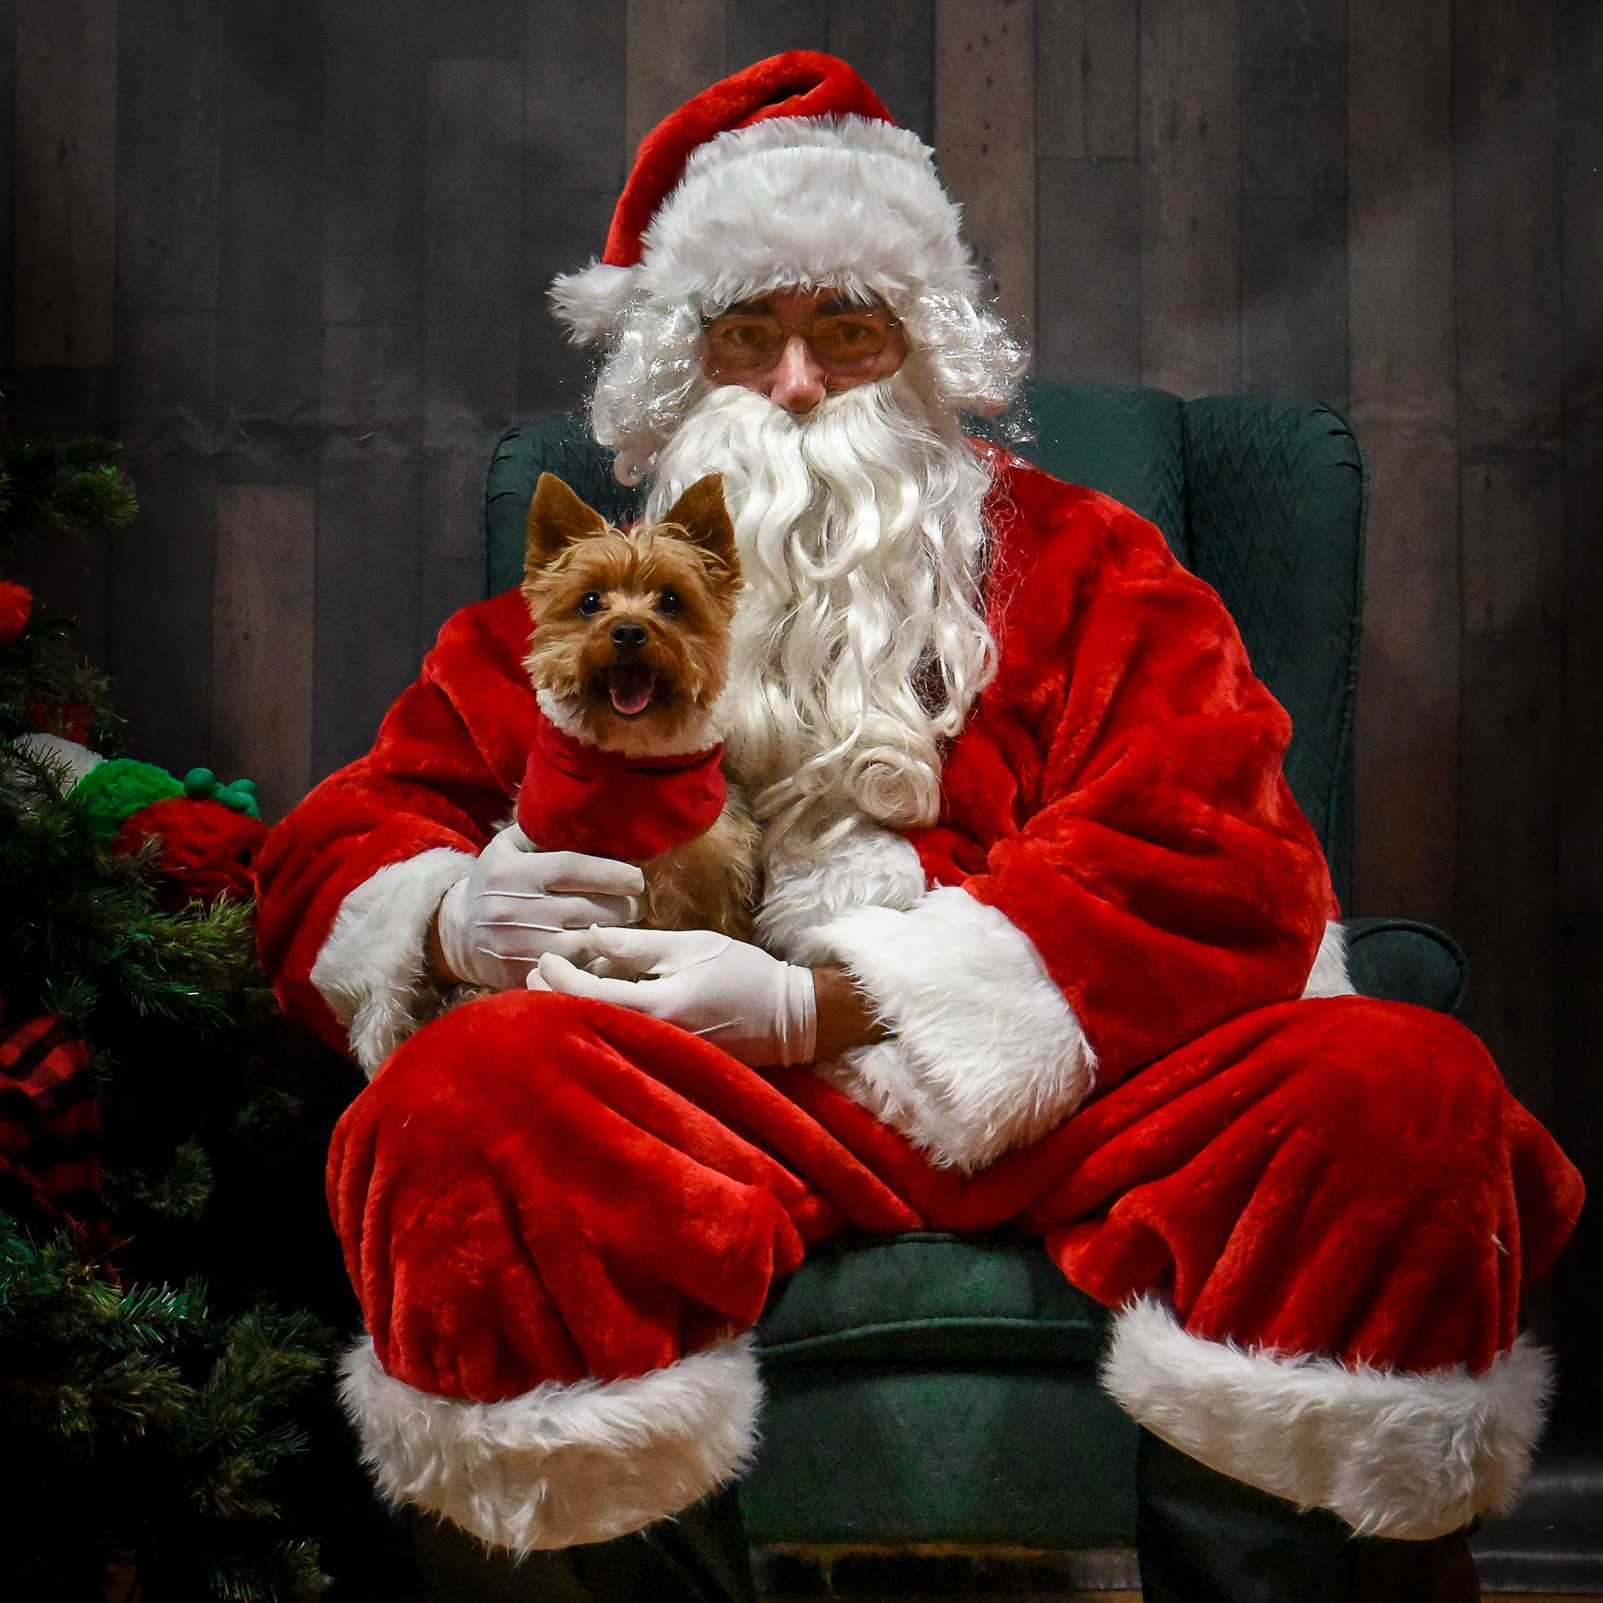 Santa sitting next to a Christmas tree holding a small dog.